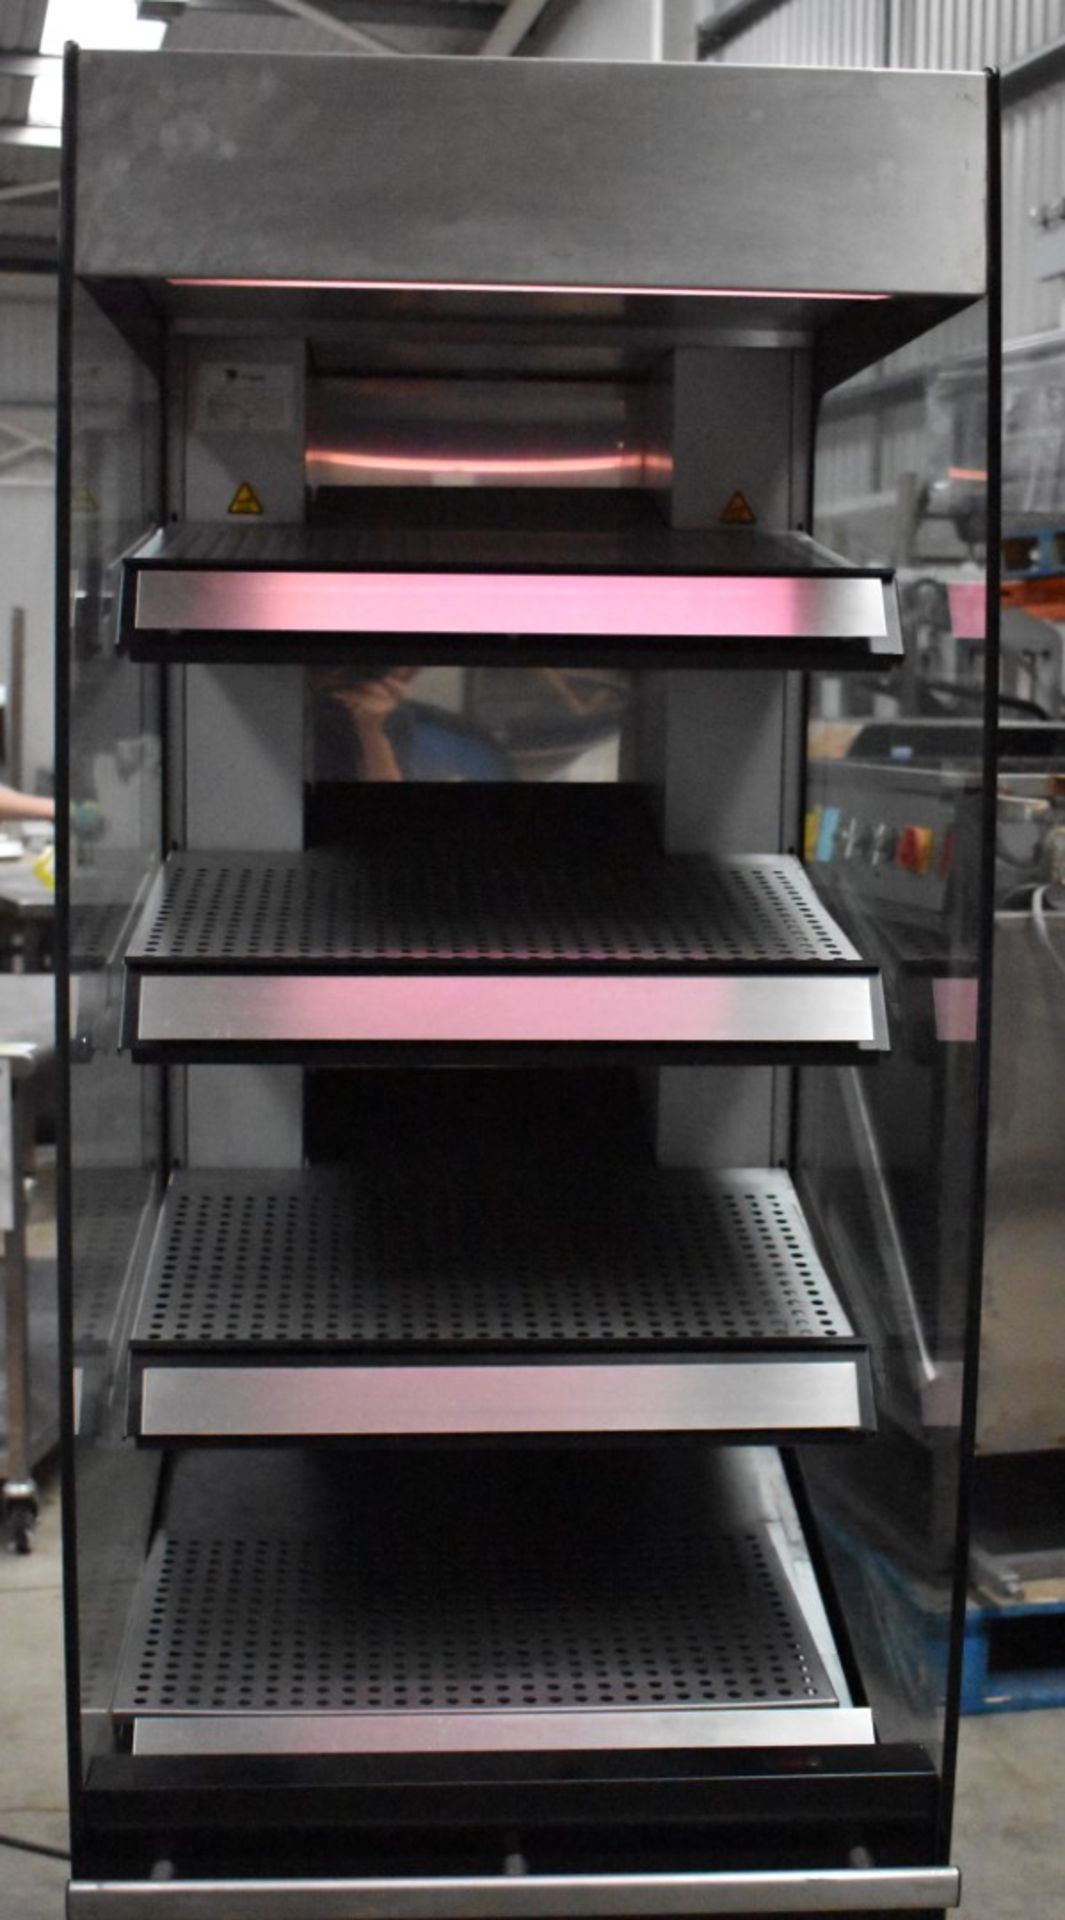 1 x Fri-Jado Four Tier Multi Deck Hot Food Warmer Heated Display Unit - Model MD60 - Contemporary - Image 3 of 12